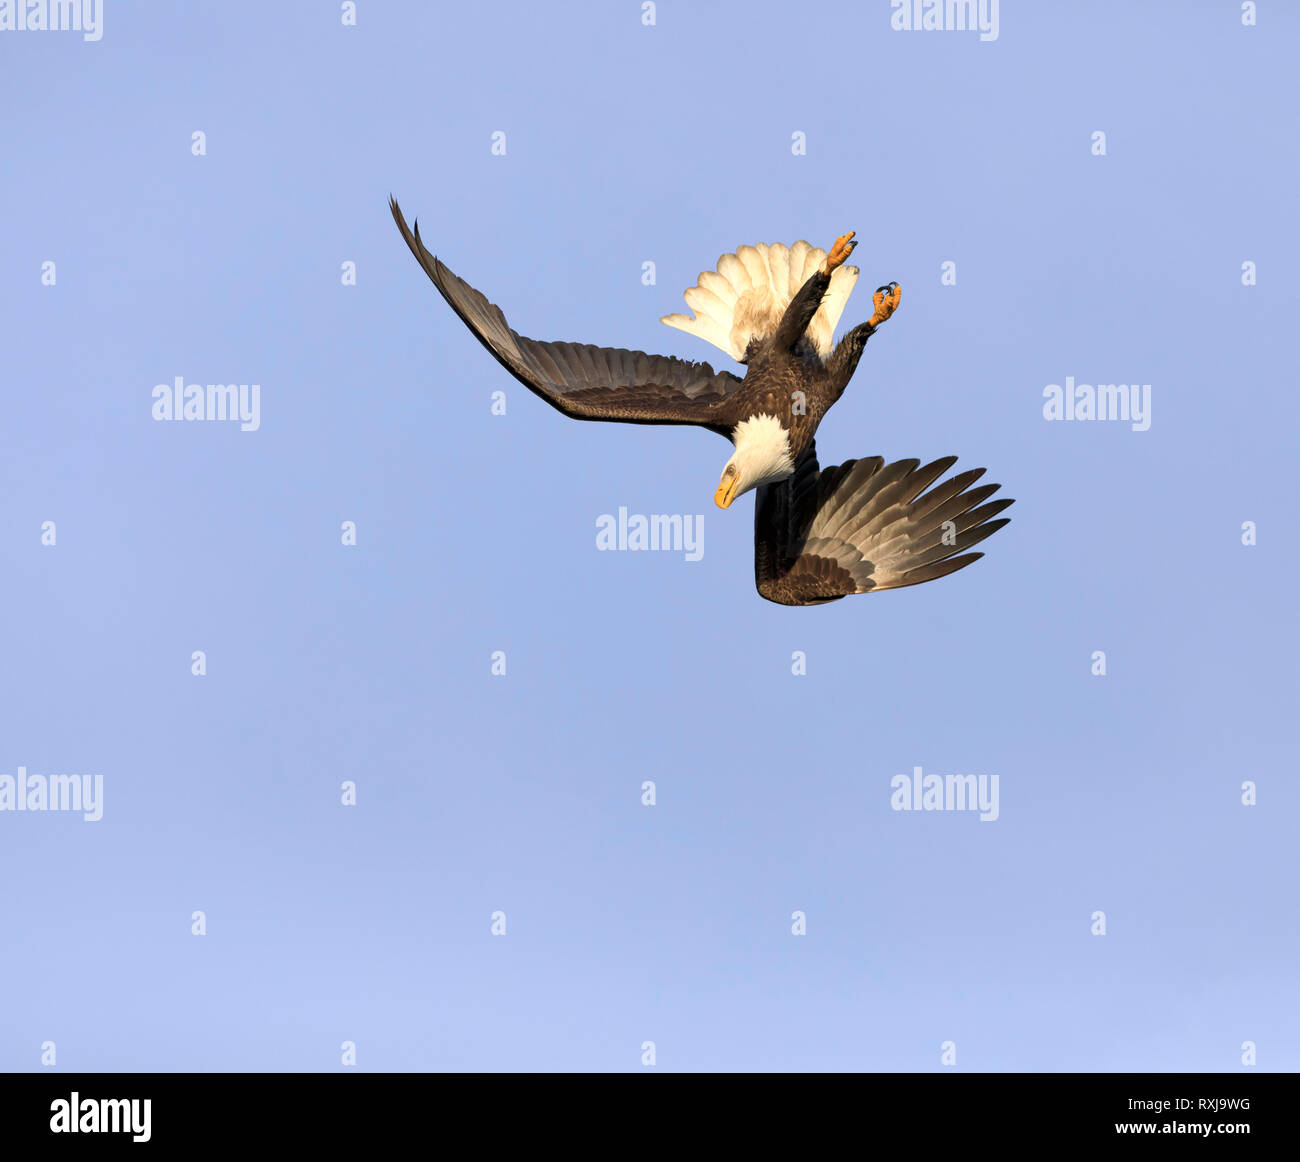 Bald eagle, Haliaeetus leucocephalus, diving for fish Stock Photo